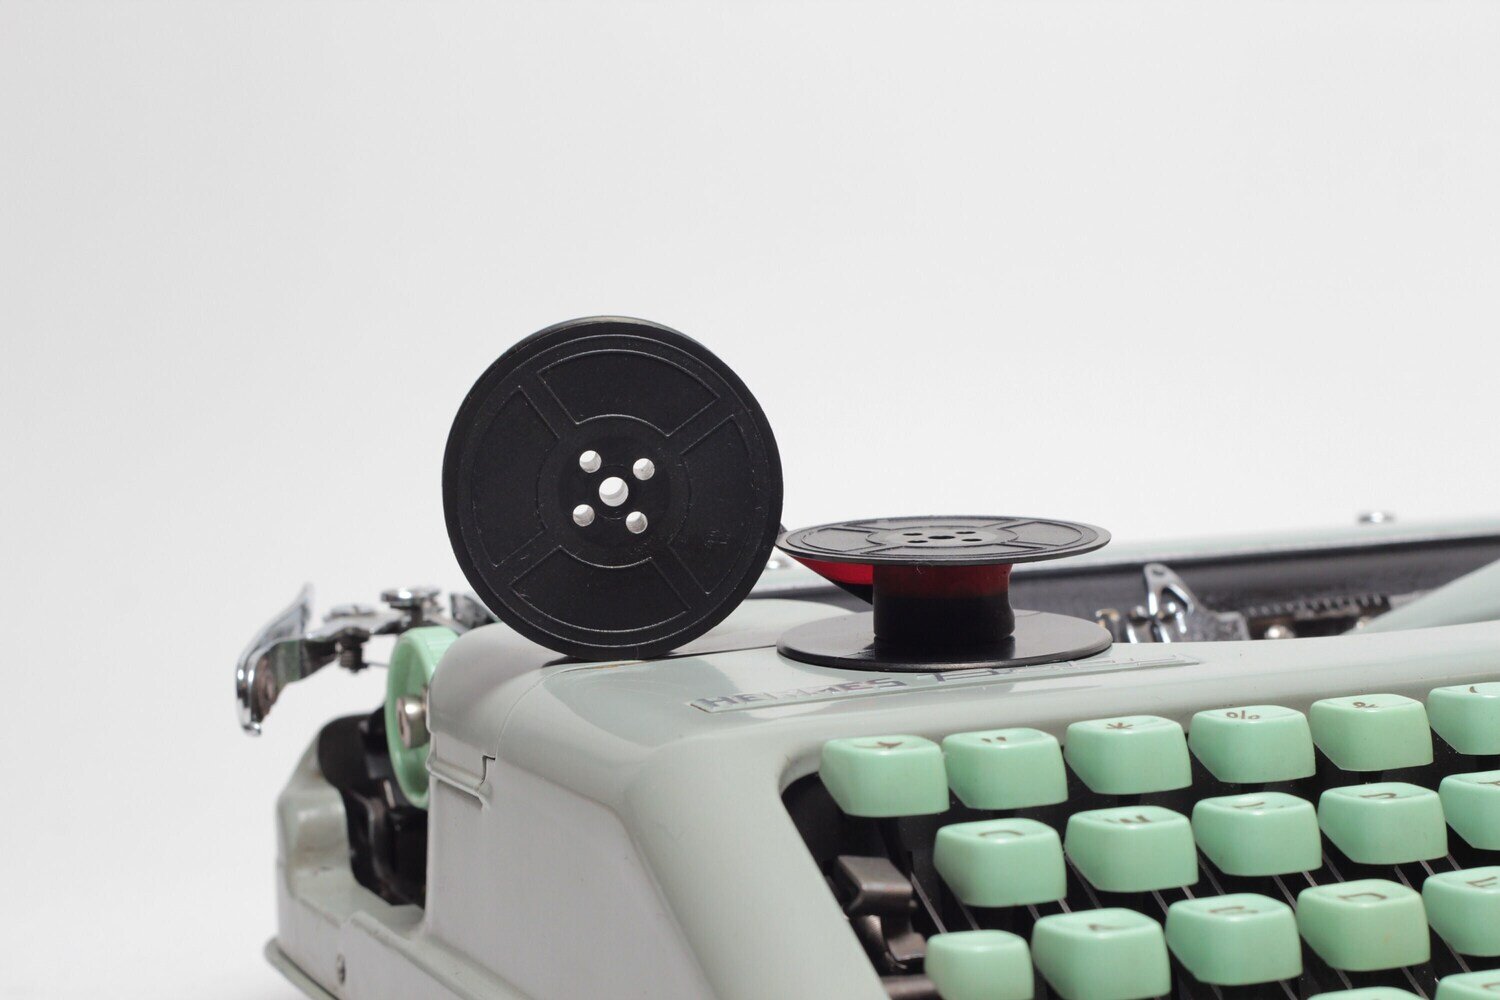 Hermes Original Universal Typewriter Ribbons for Hermes Typewriters